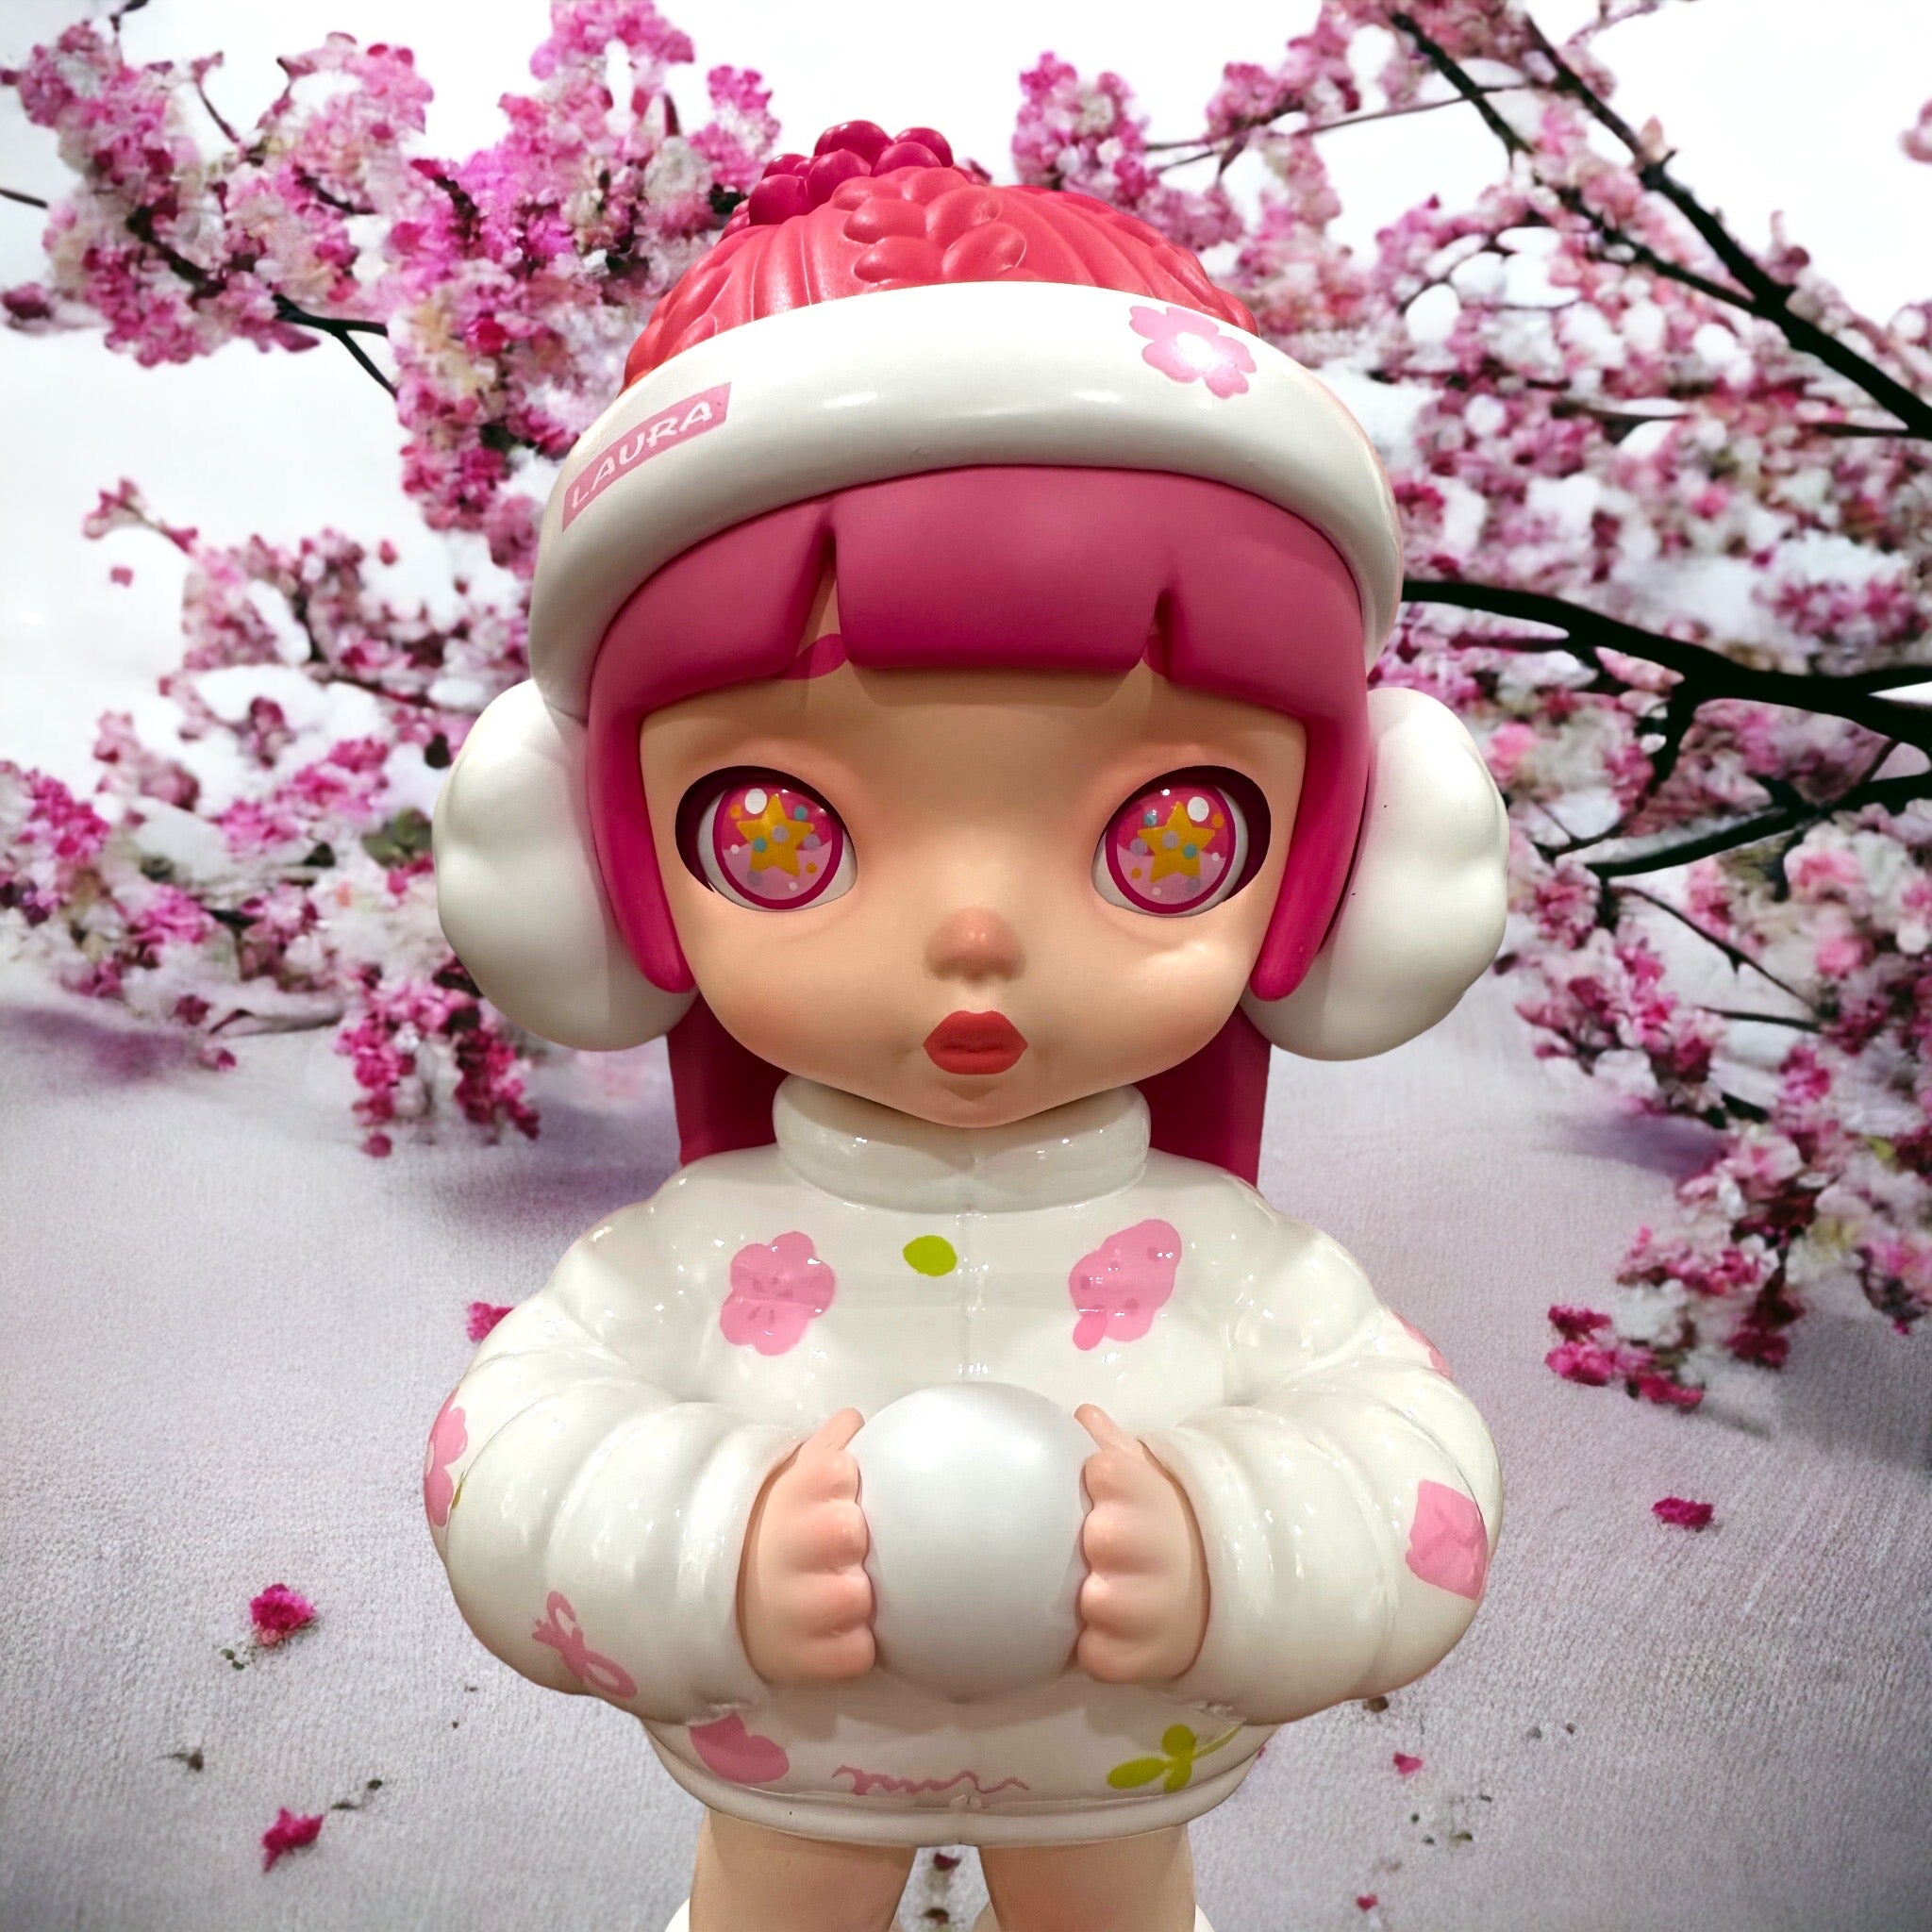 LAURA 150% The Snow Of Cherry Blossom Sakura